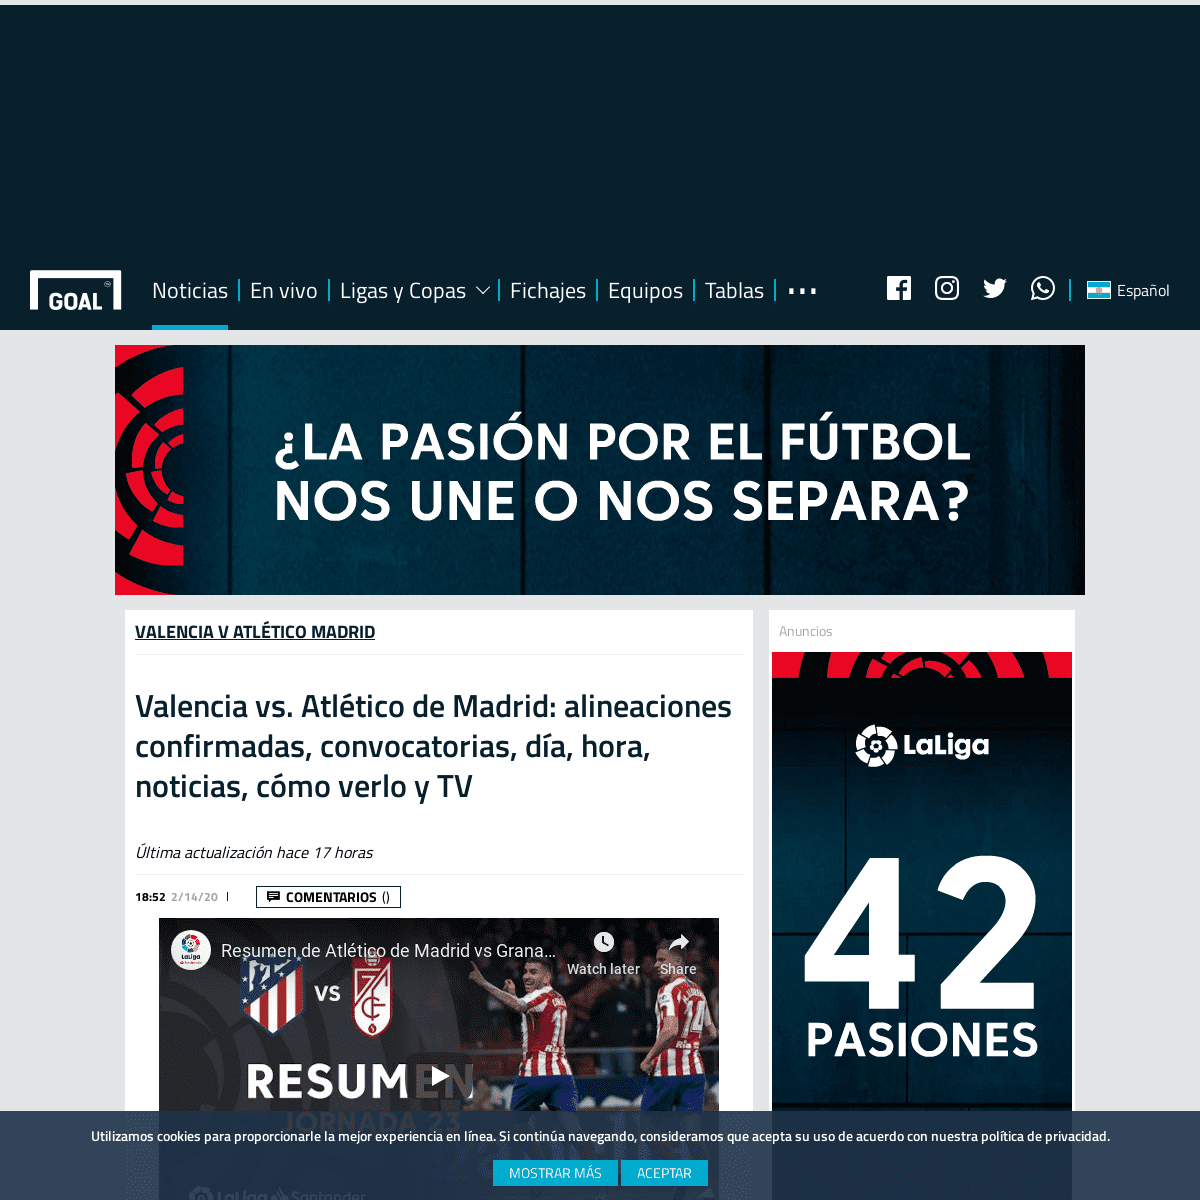 A complete backup of www.goal.com/es-ar/noticias/valencia-vs-atletico-de-madrid-alineaciones-confirmadas/1r3l502go0c4513zyuucrbc